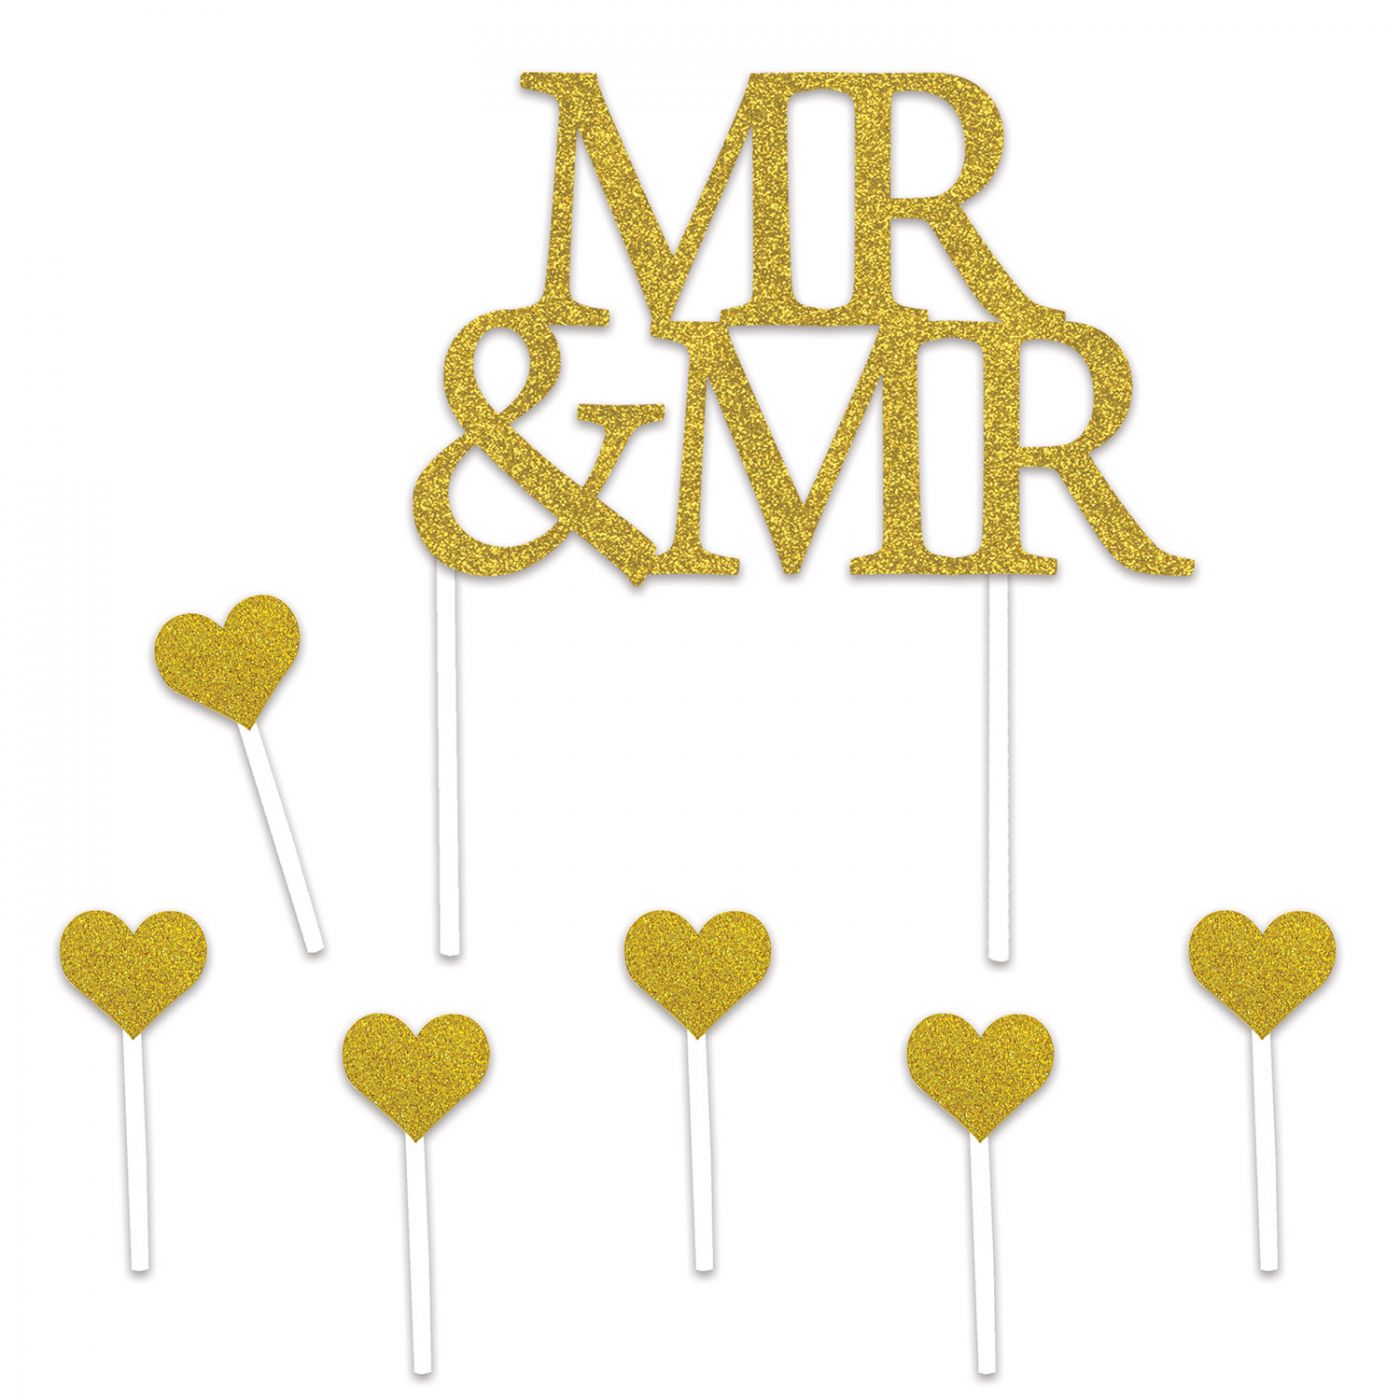 Mr & Mr Cake Topper (12) image